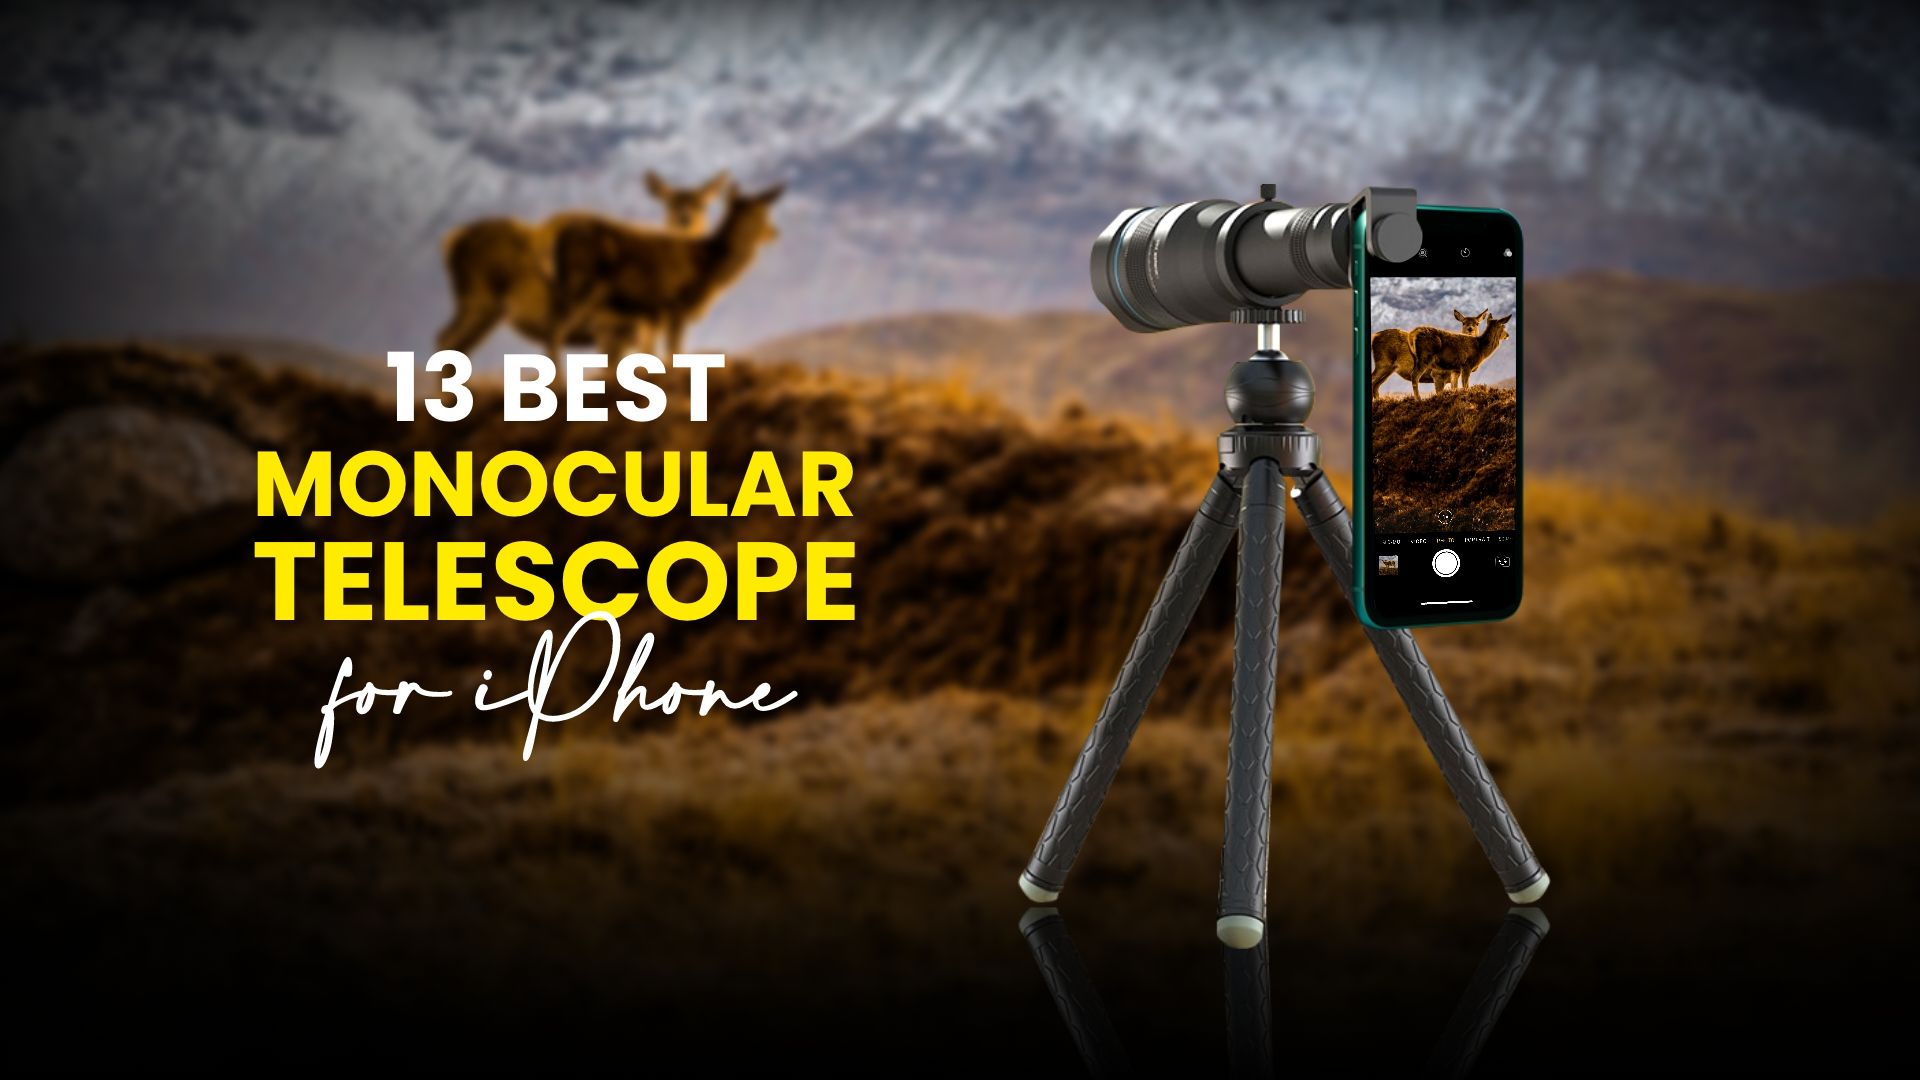 Starscope Monocular Telescope for Adults Bak4 Waterproof 12x50 Hd Professional Handheld Mini Telescope for Smartphone Phone Telescope Camera for iPhone Android Samsung 